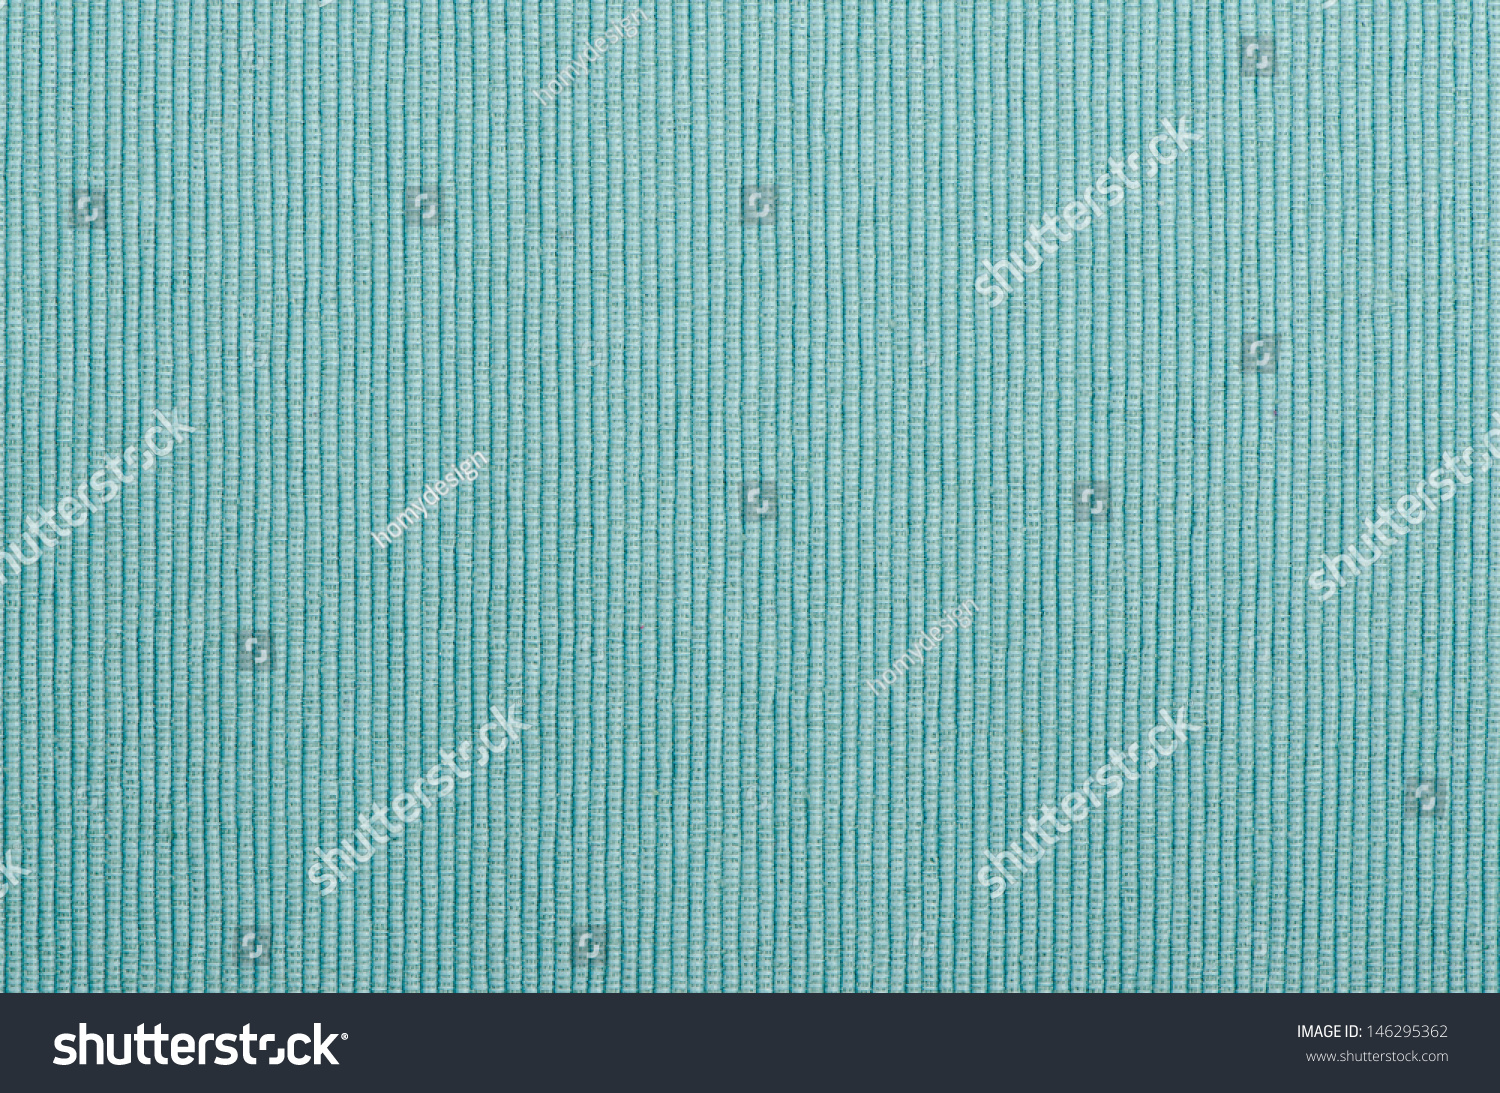 Background Made Closeup Blue Fabric Texture Stock Photo 146295362 ...